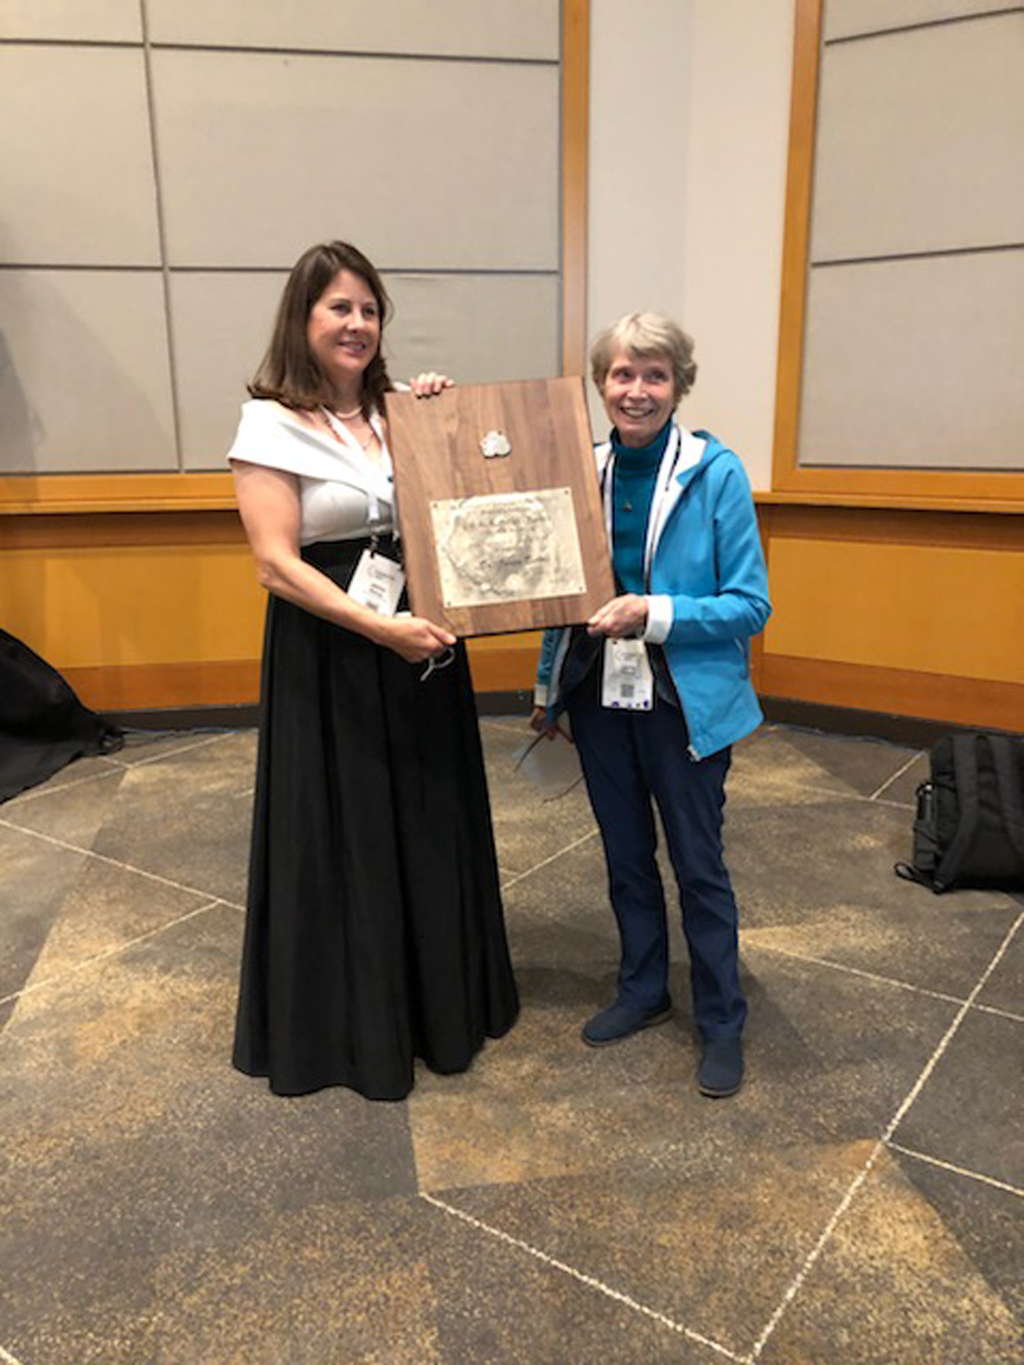 Dr. Janice Bishop being presented her award plaque.